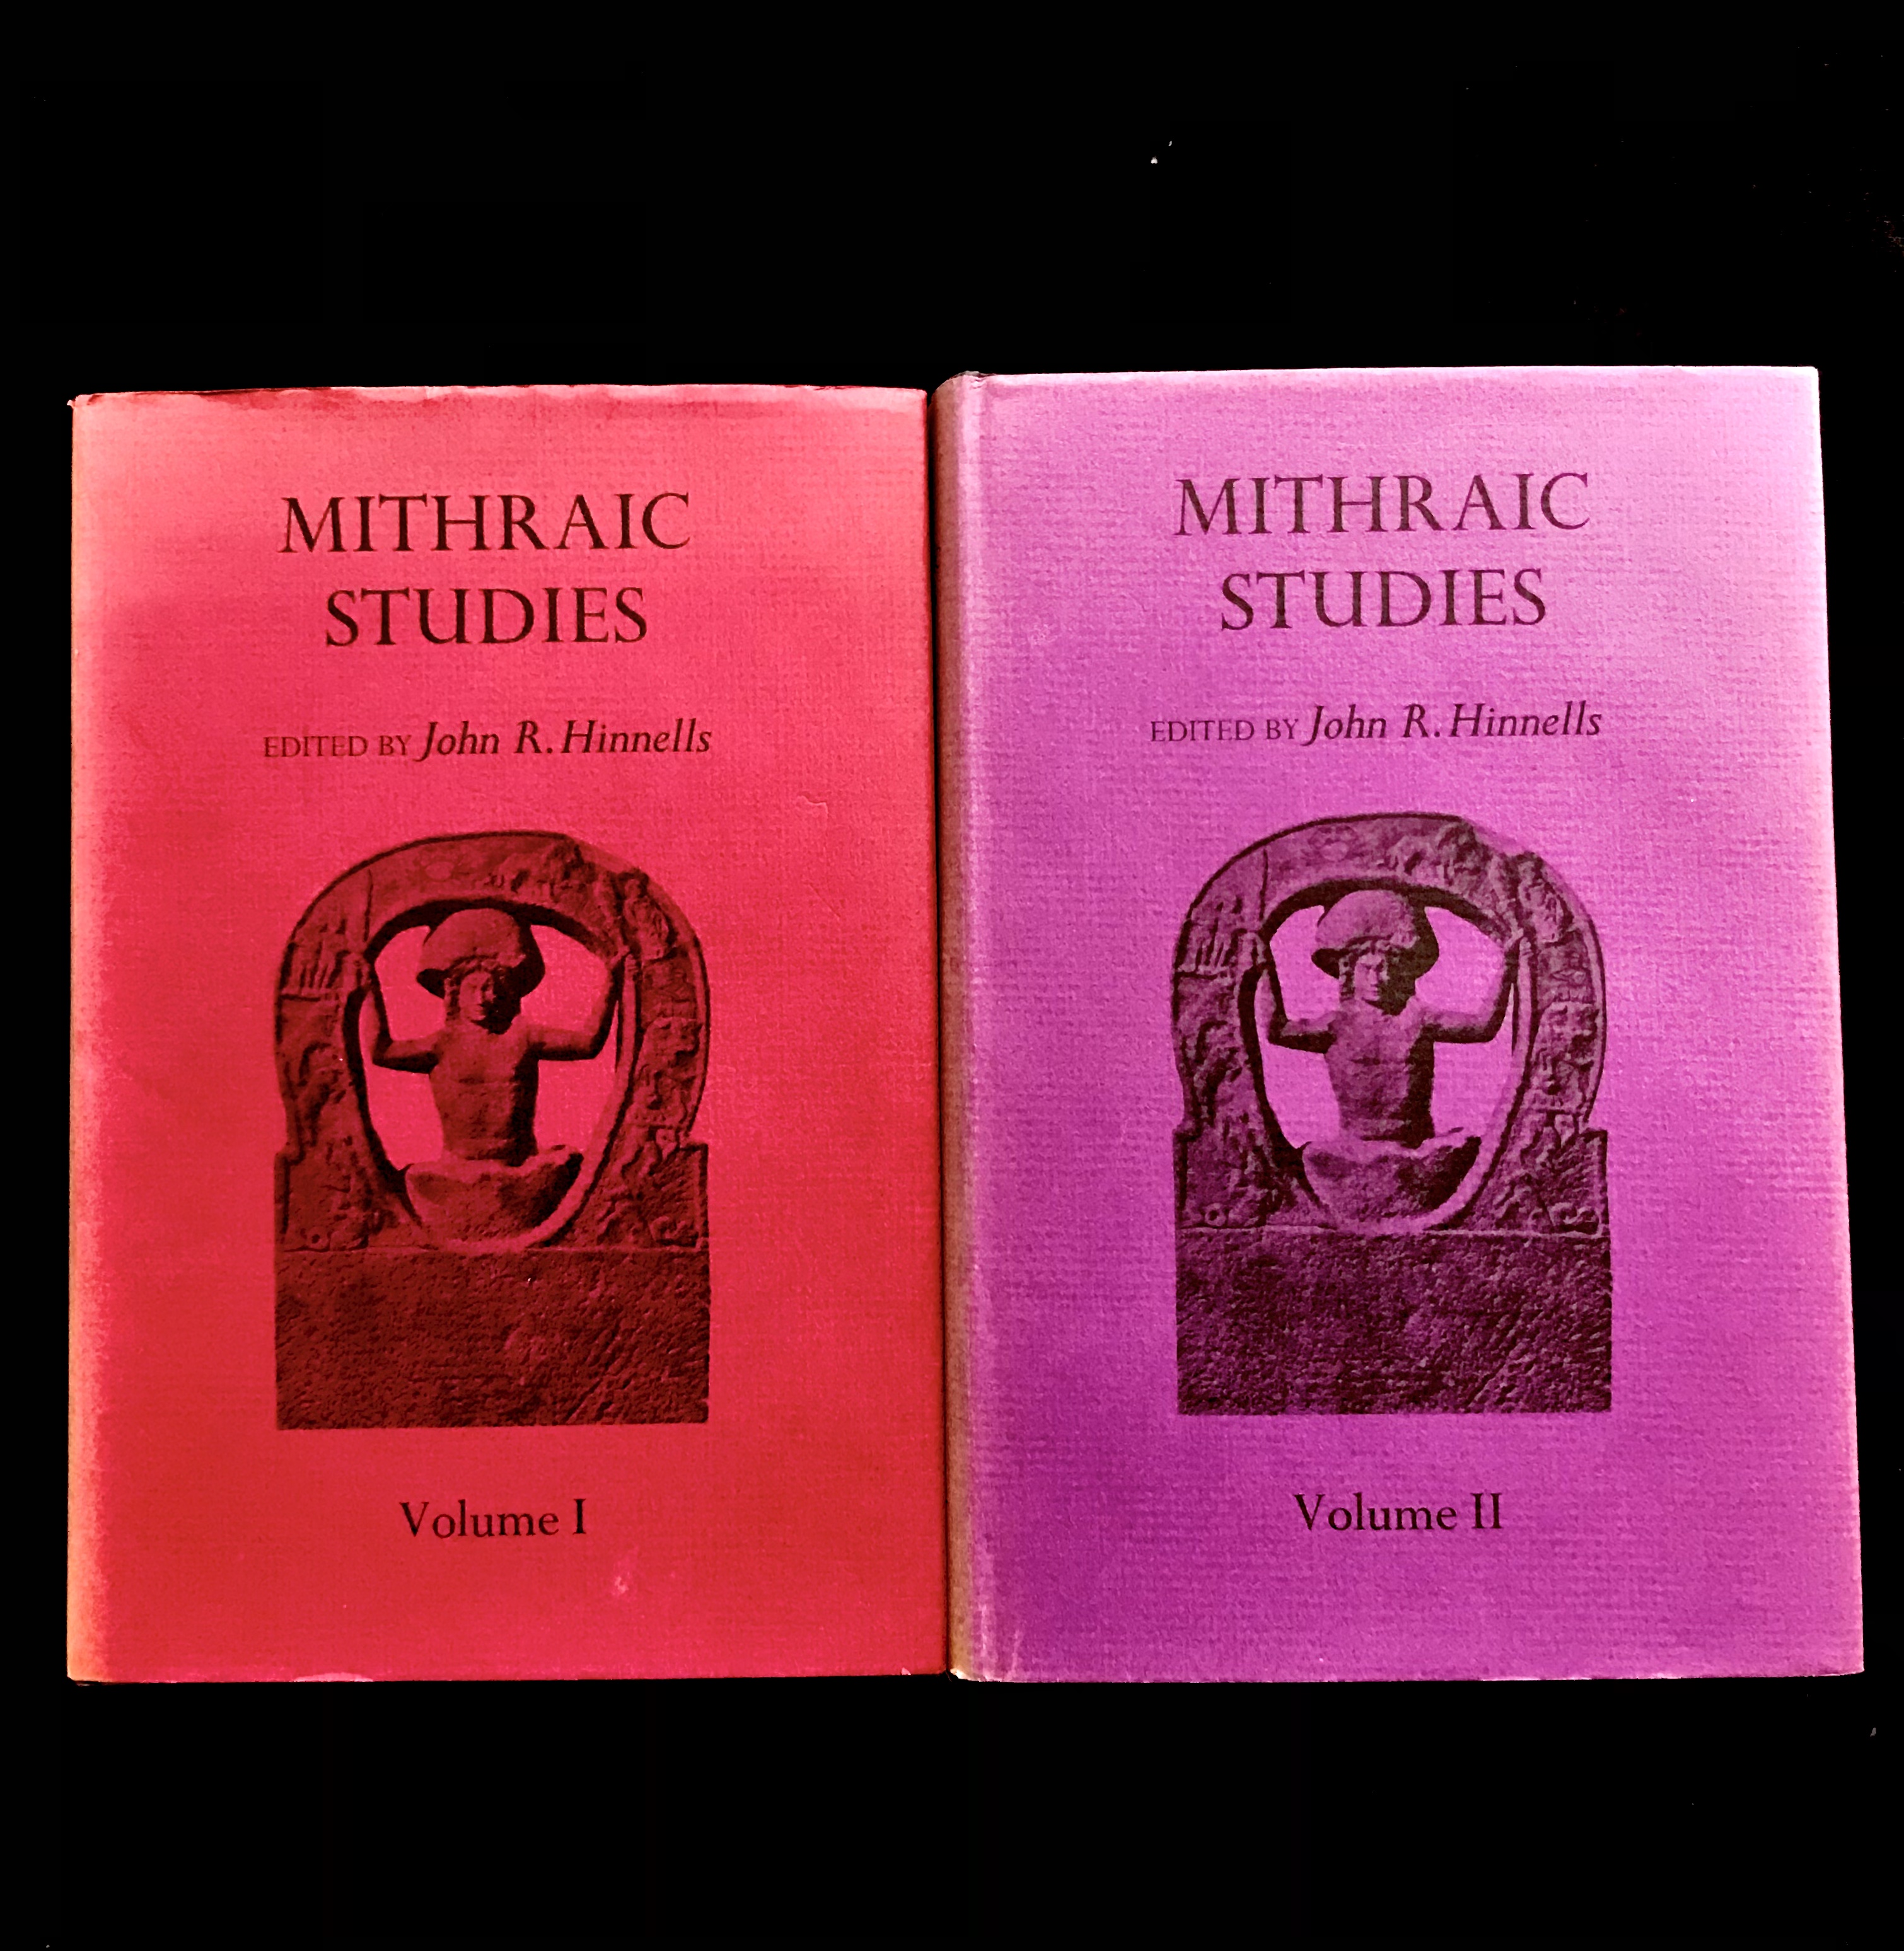 Mithraic Studies 2 Volumes Edited by John R. Hinnells